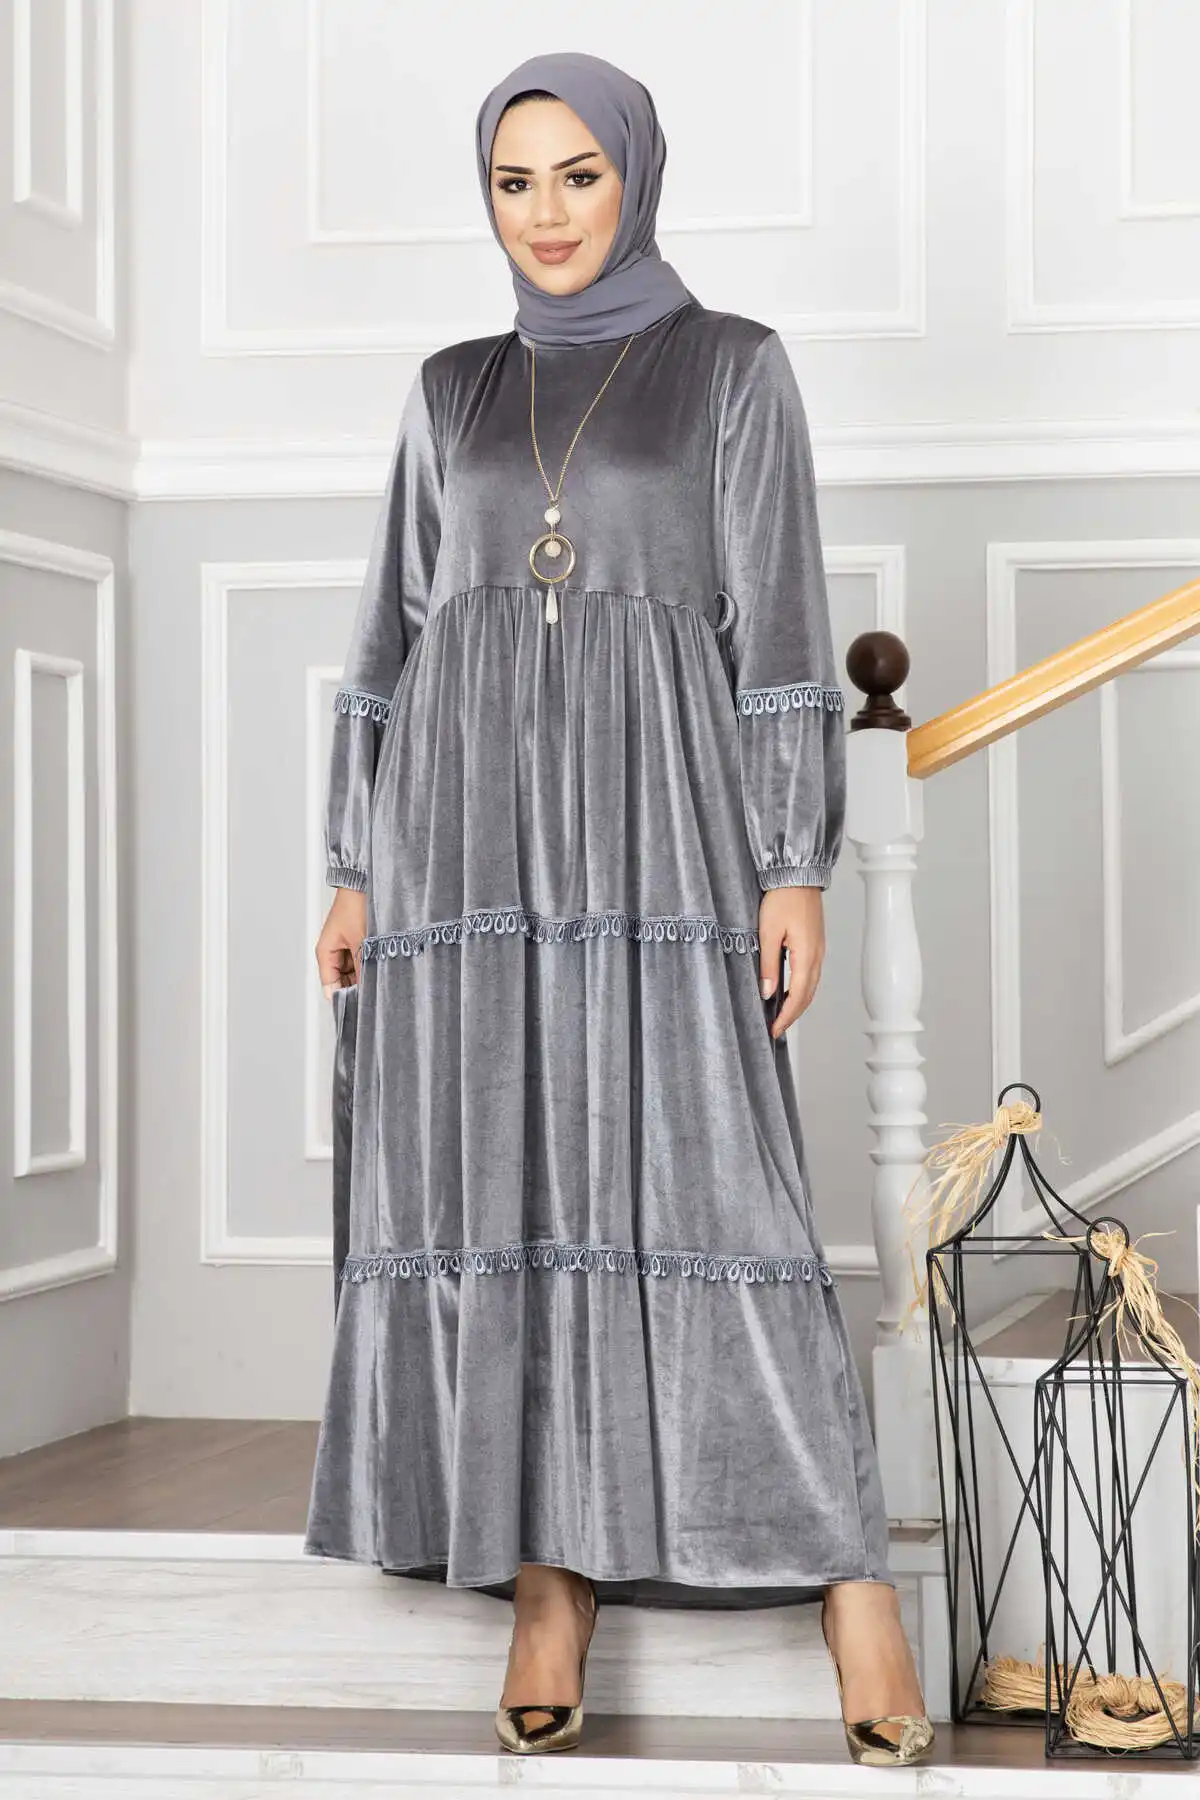 Lace Velvet Hijab Dress Abaya, Modest Clothing, Muslim Dress, Modest Dress, Abaya For women, islamic dress, muslim wedding dress